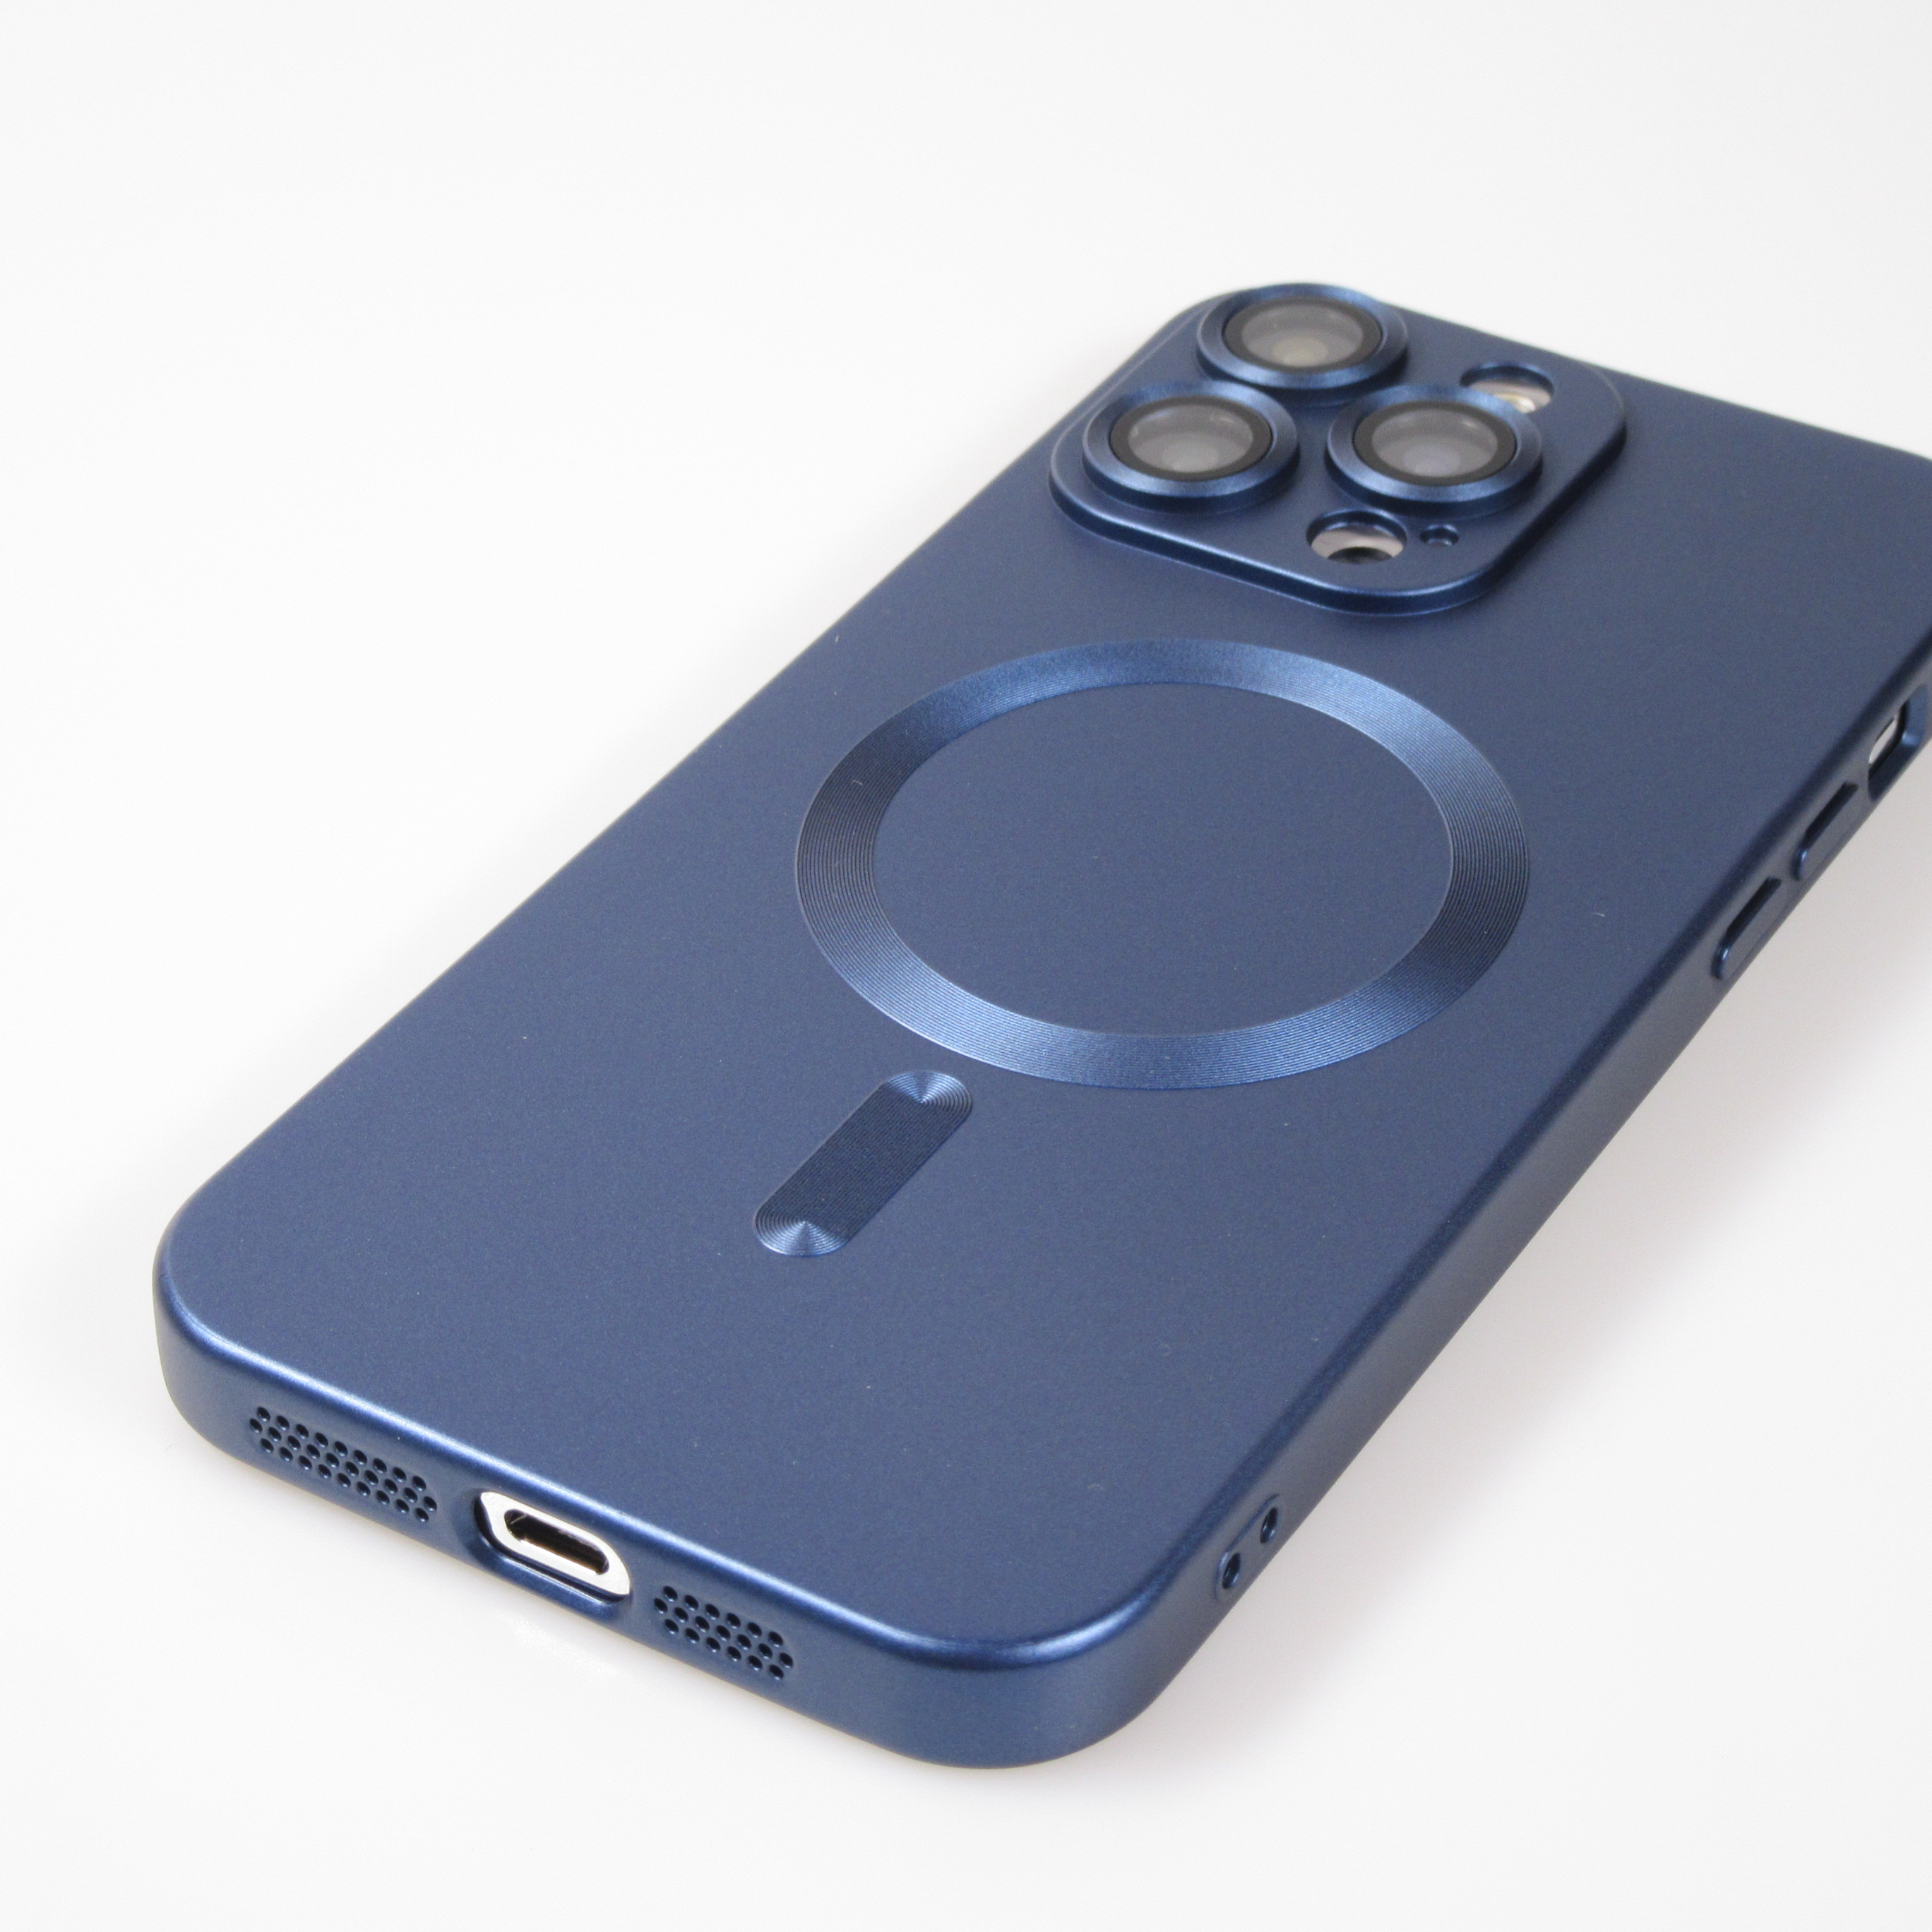 Protection camera iPhone 15 Pro / 15 Pro Max Bleu